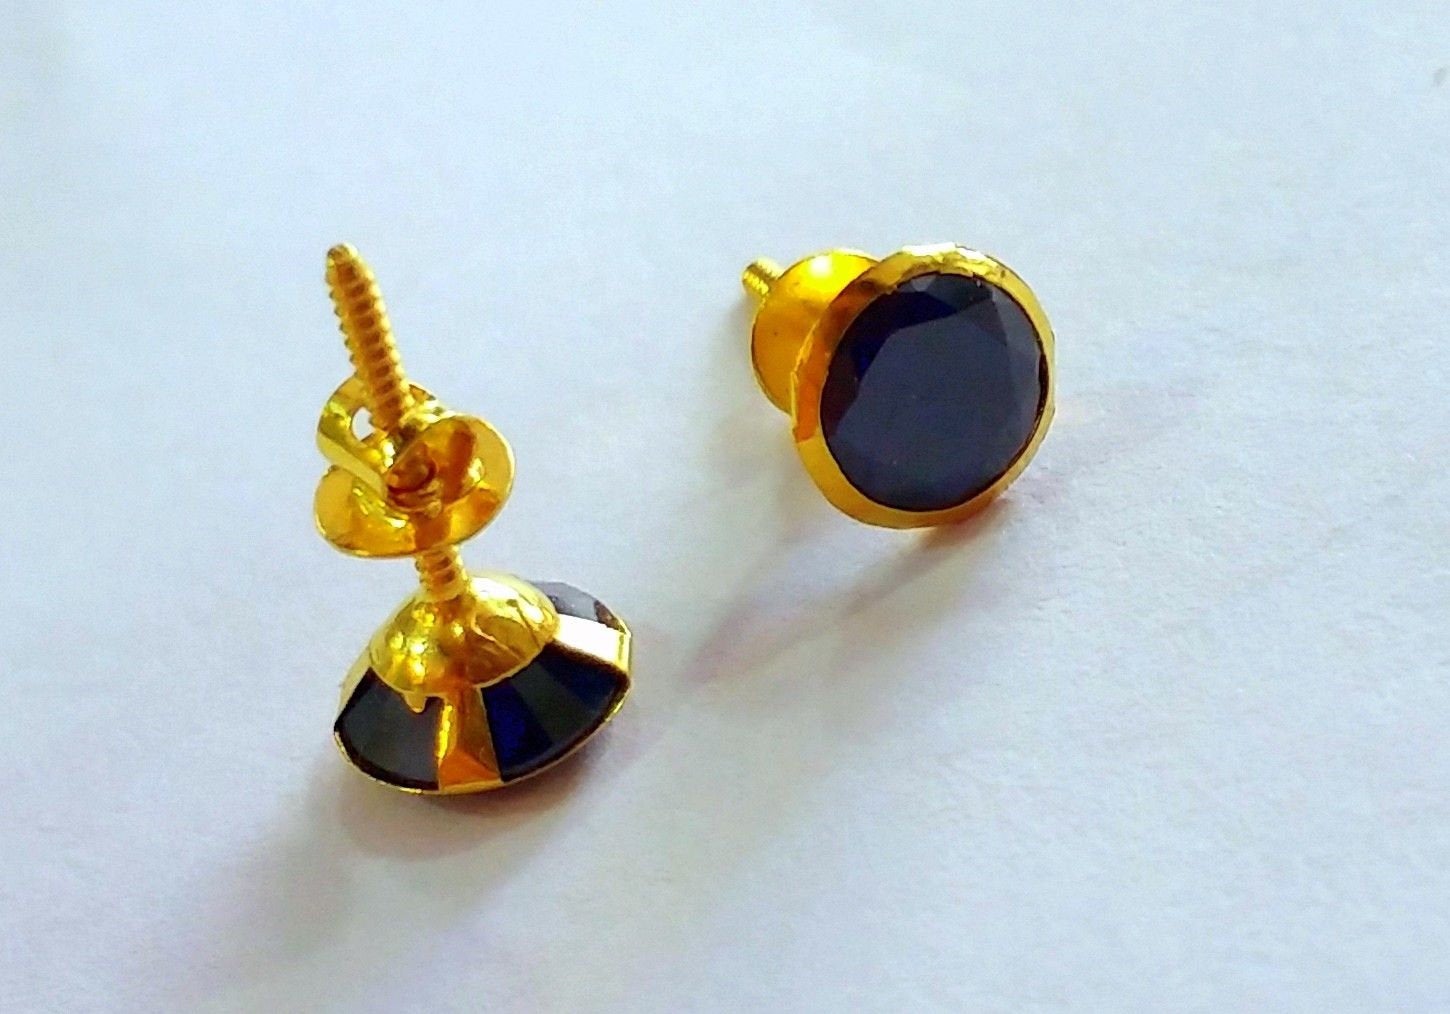 Genuine 18k yellow gold handmade fabulous black onyx stone excellent antique vintage design stud earrings pair unisex jewelry - TRIBAL ORNAMENTS